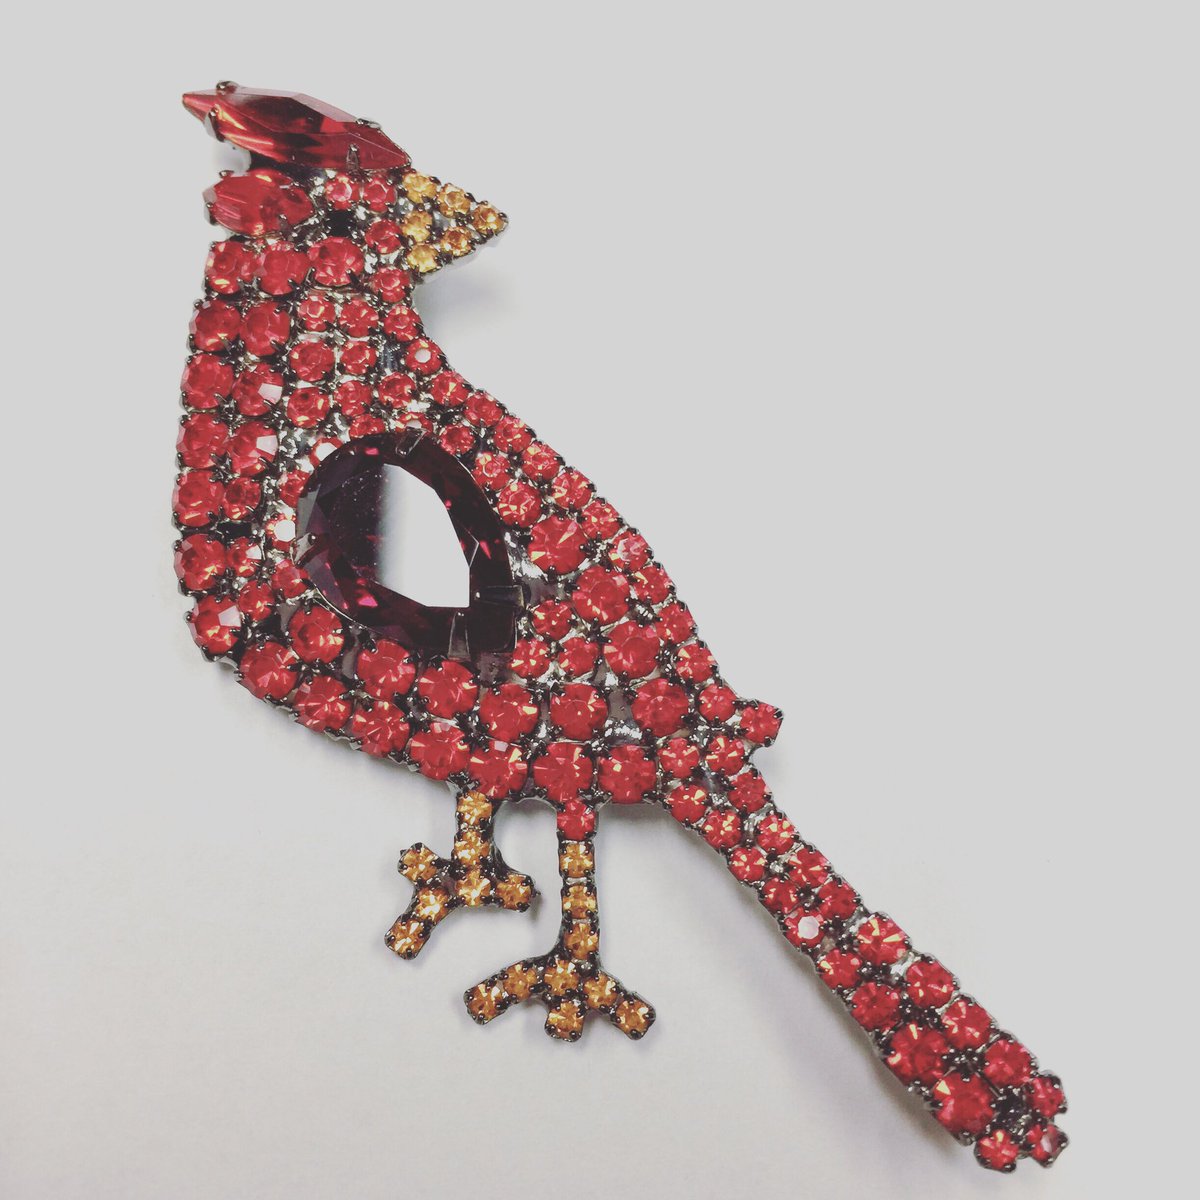 Beautfiful Cardinal Pin #etsy #jewelry #brooch #audobon #songbird #cardinal #cardinalbird #cardinalbirds #brooches #broochaddict #broochaddiction #avian #bird #unique #swarovskicrystals etsy.me/2PrcJtr